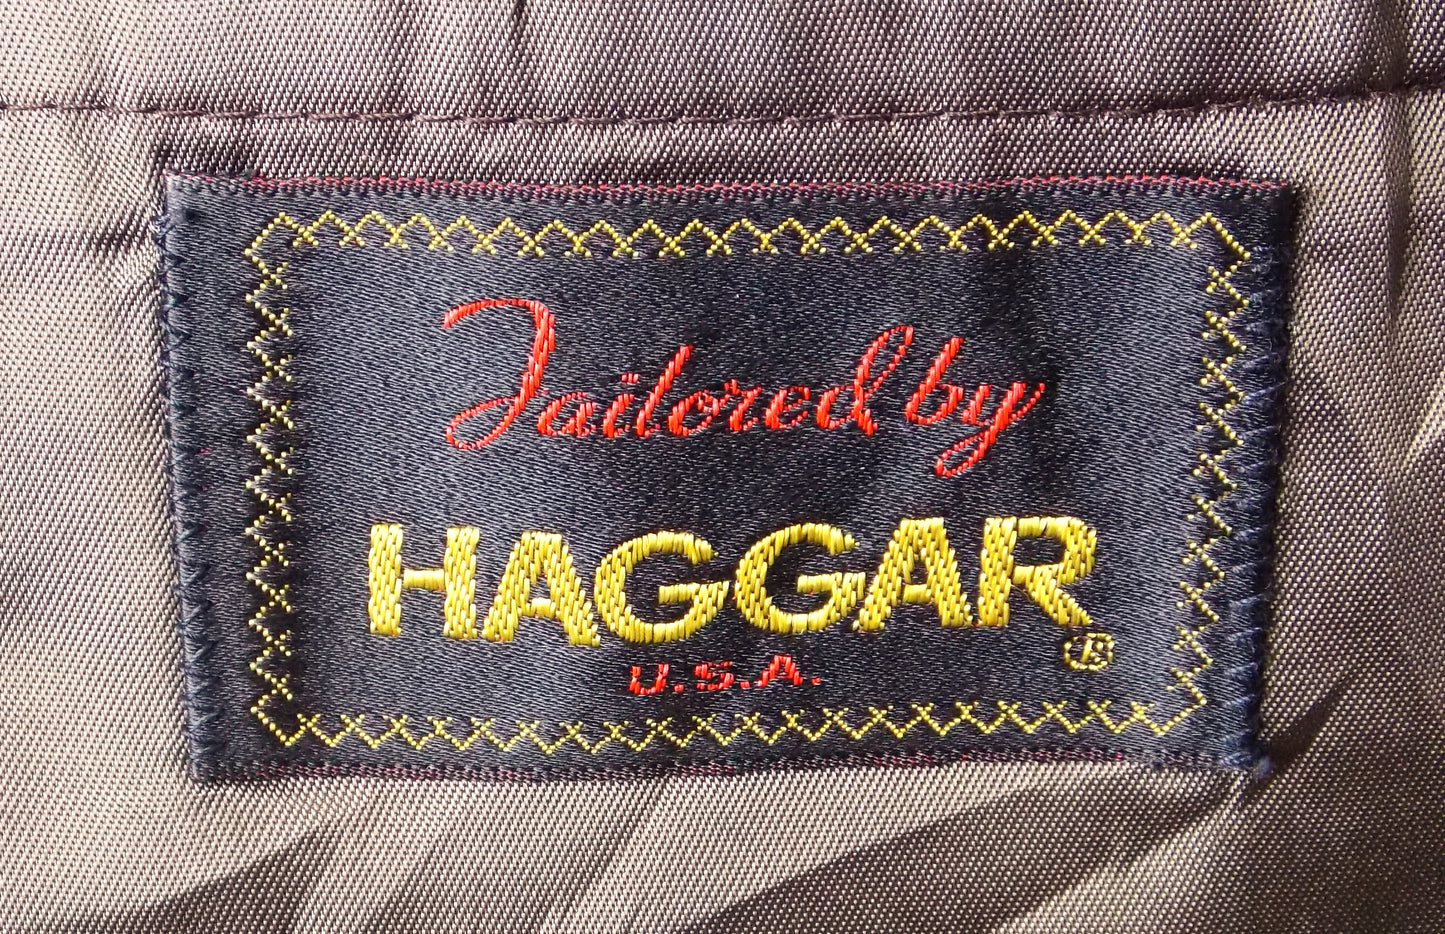 Gents Haggar Sports jacket.